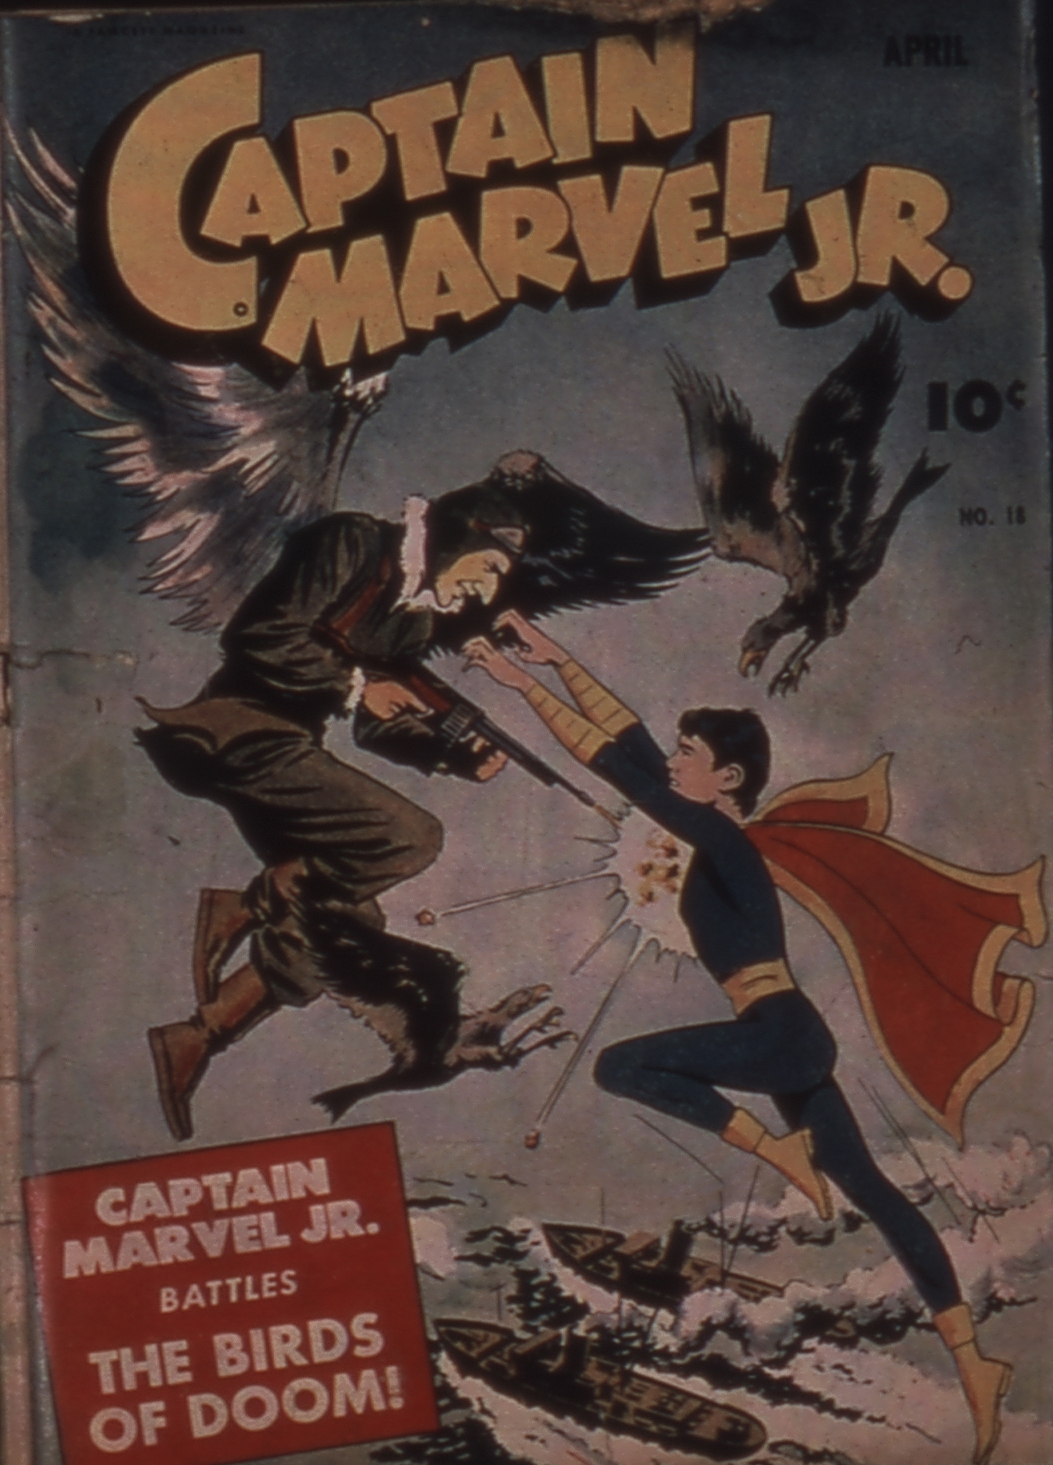 Read online Captain Marvel, Jr. comic -  Issue #18 - 1